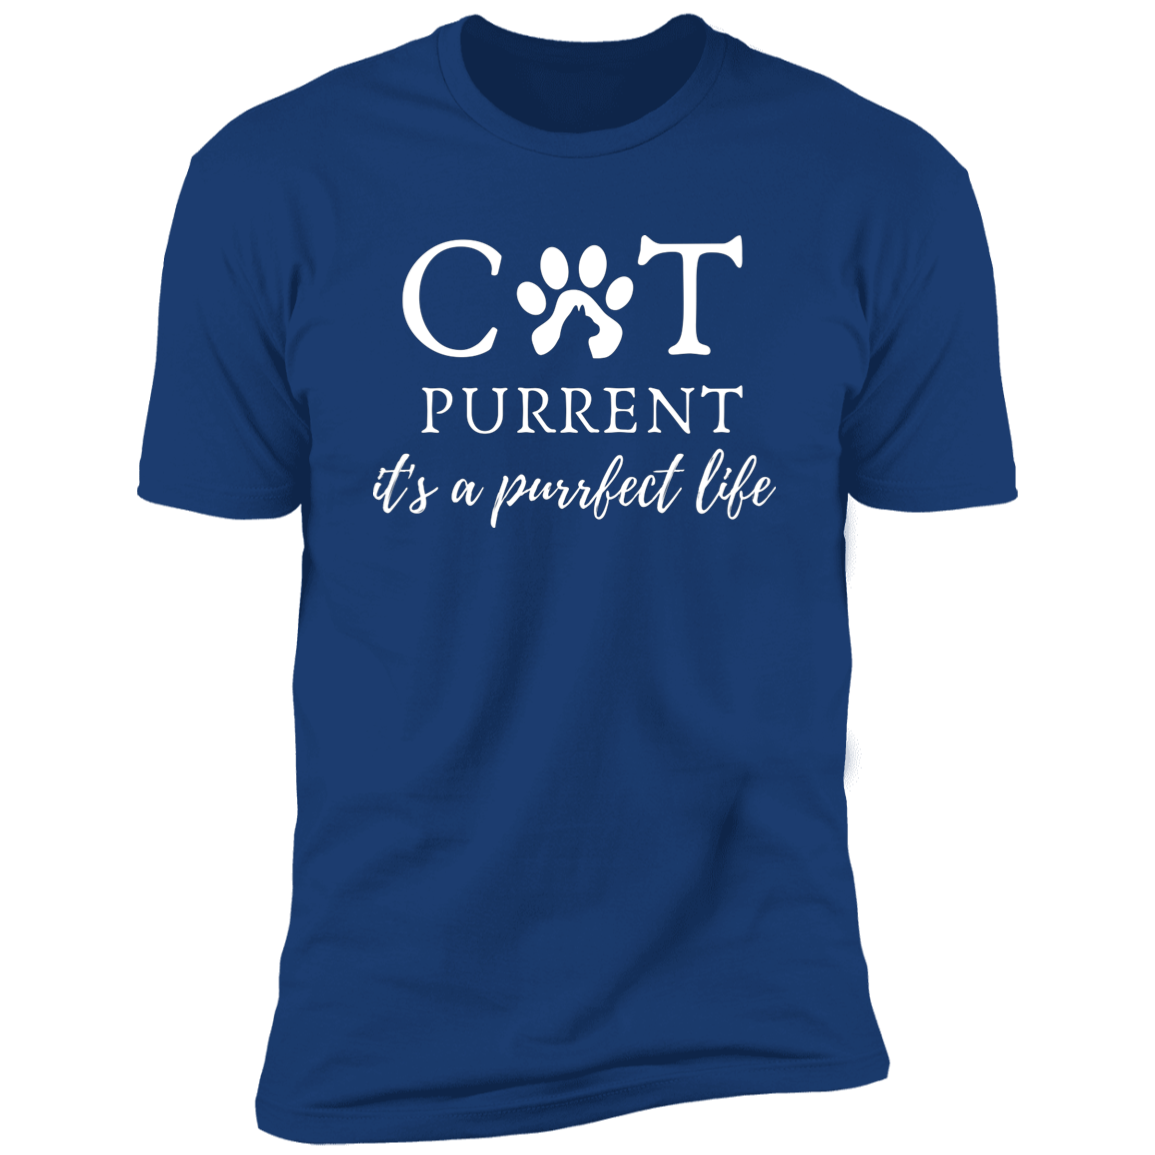 Cat Purrent It's a Purrfect Life T-shirt, Cat Parent Shirt for humans, in royal blue